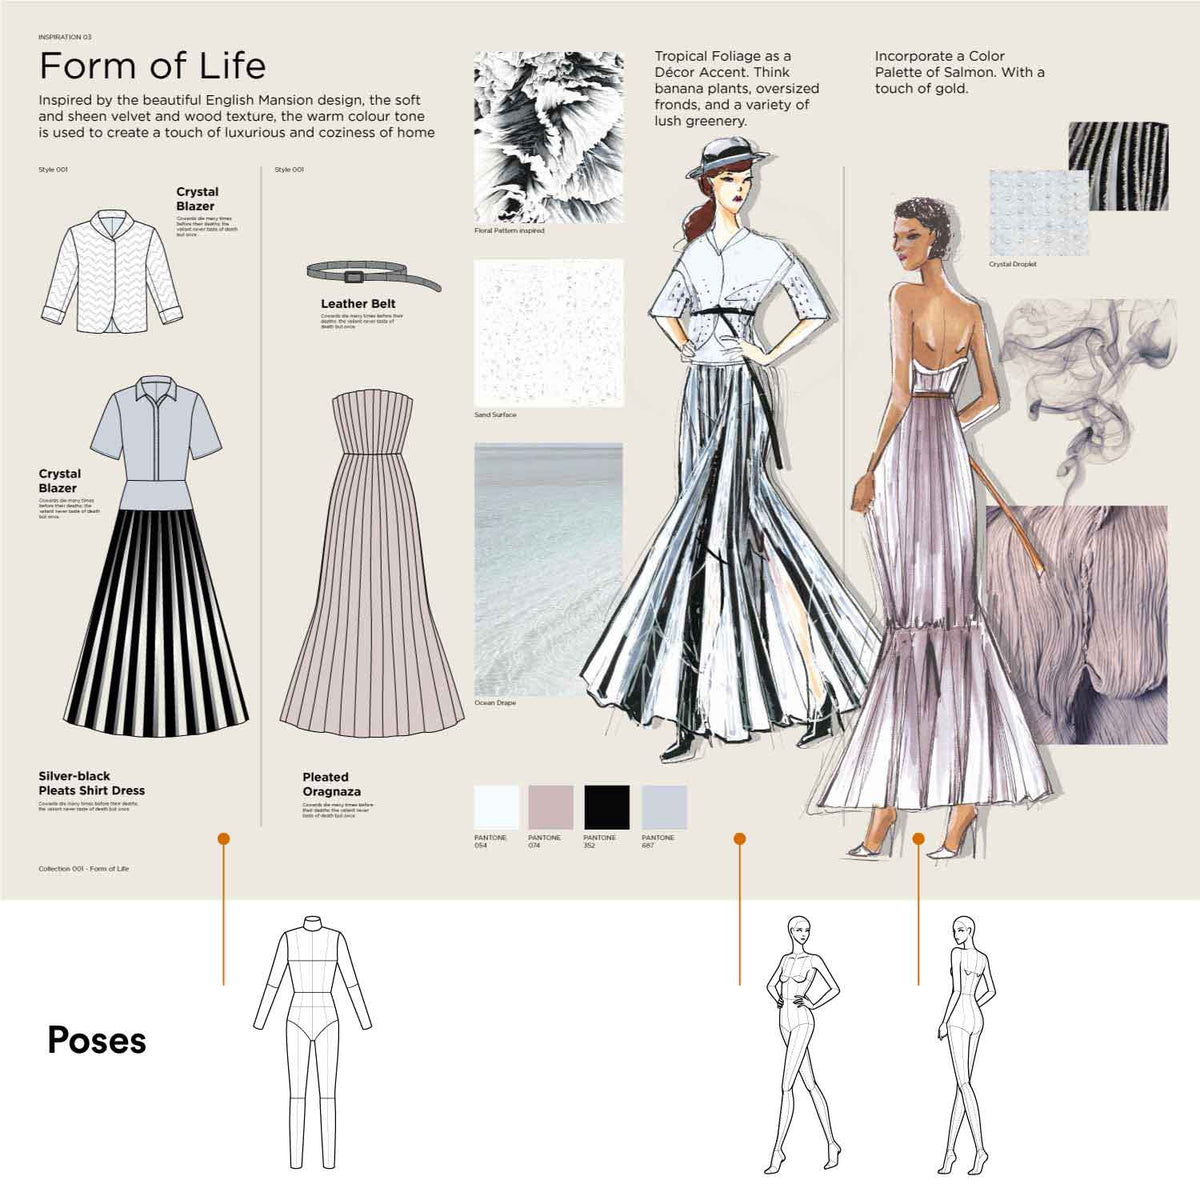 Poses for Fashion Illustration, Femme - Fashionary